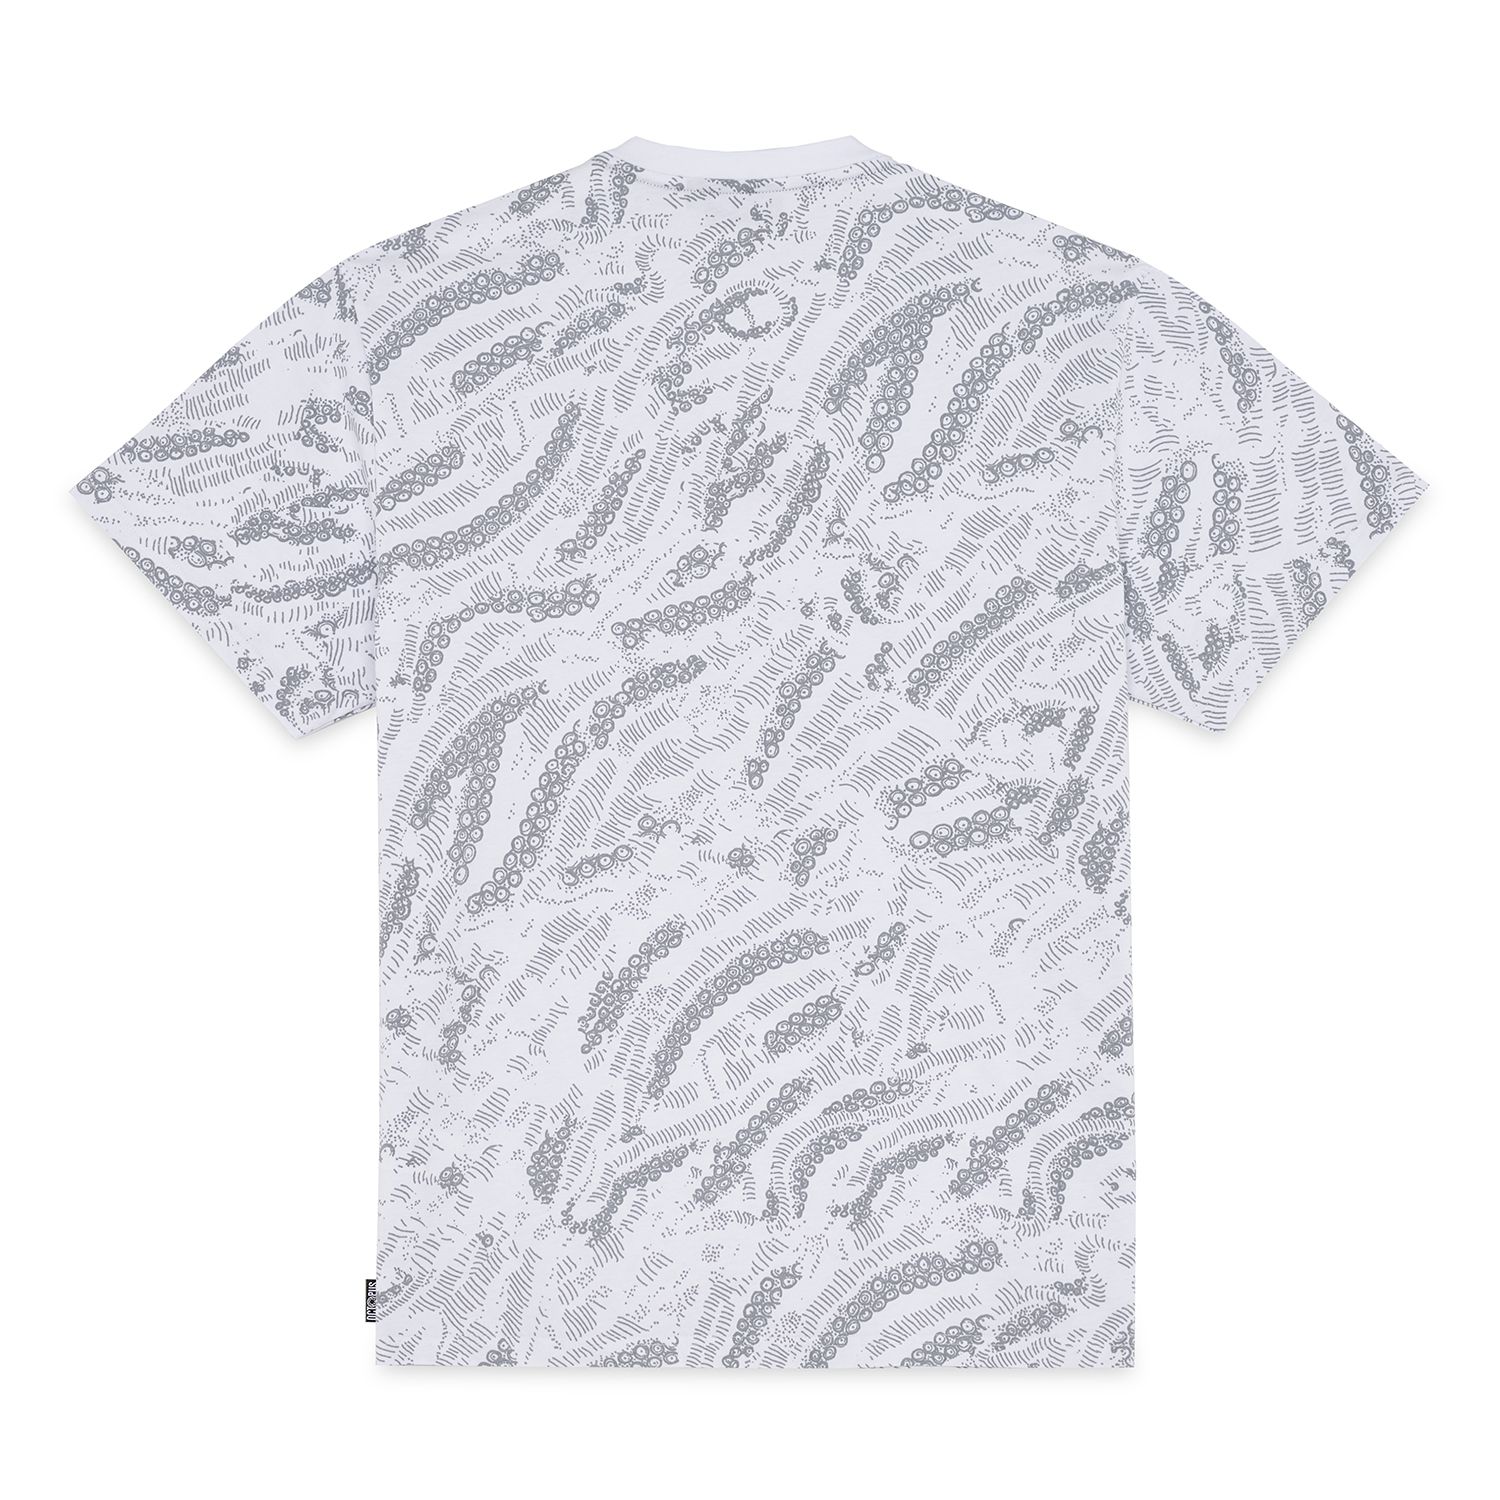 Deco Tee T-Shirt (White)